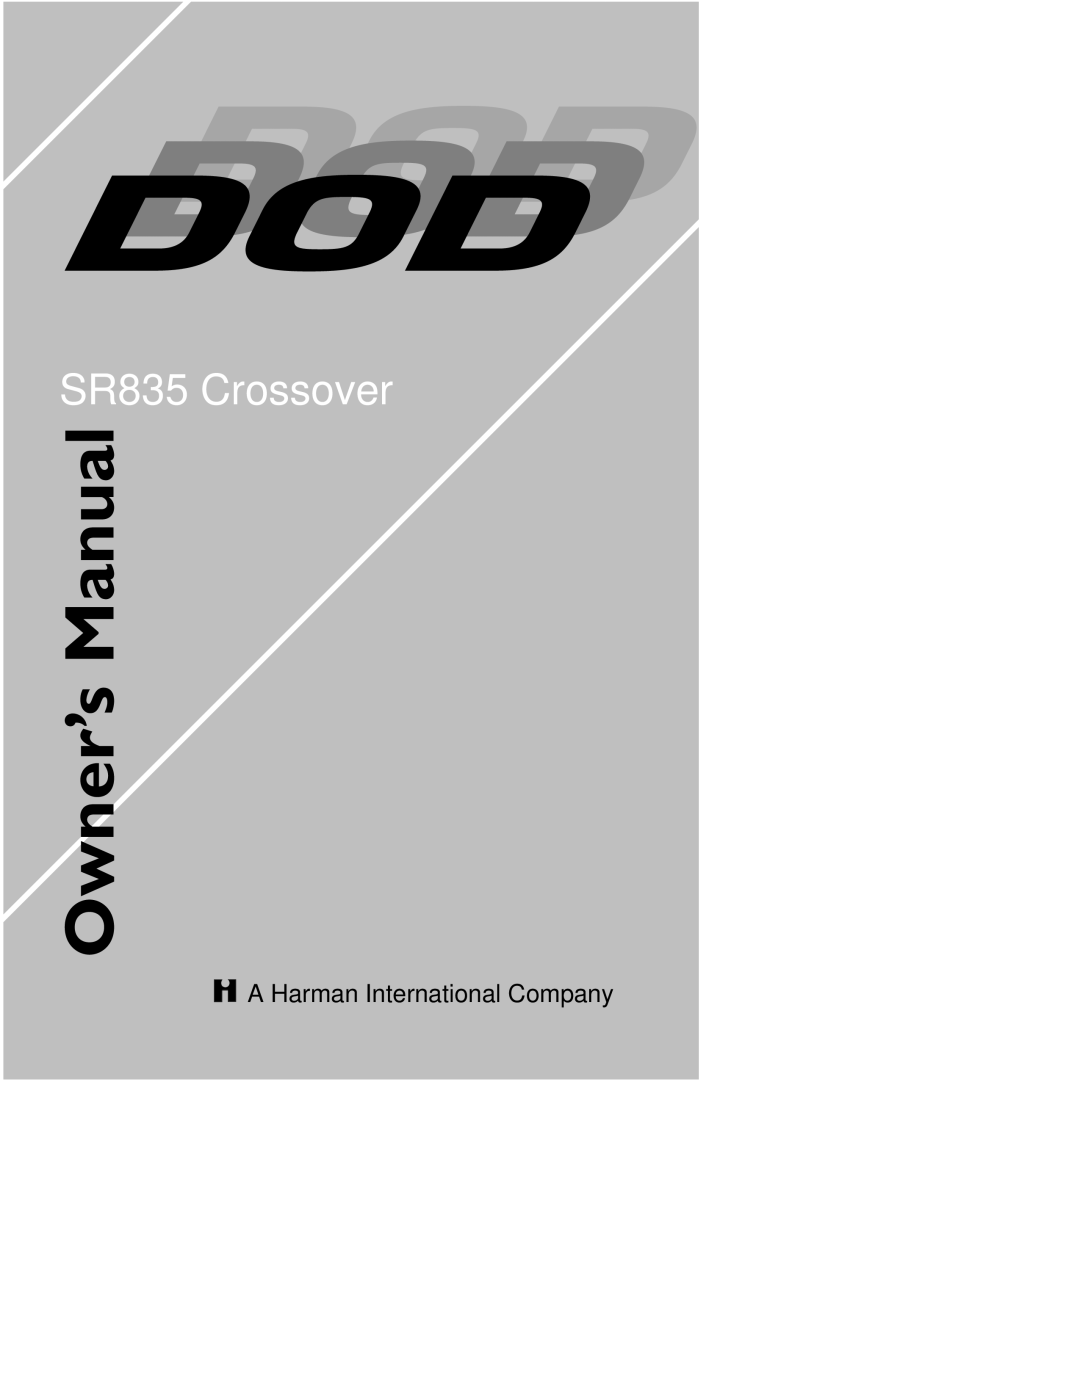 DOD owner manual SR835 Crossover, A Harman International Company 